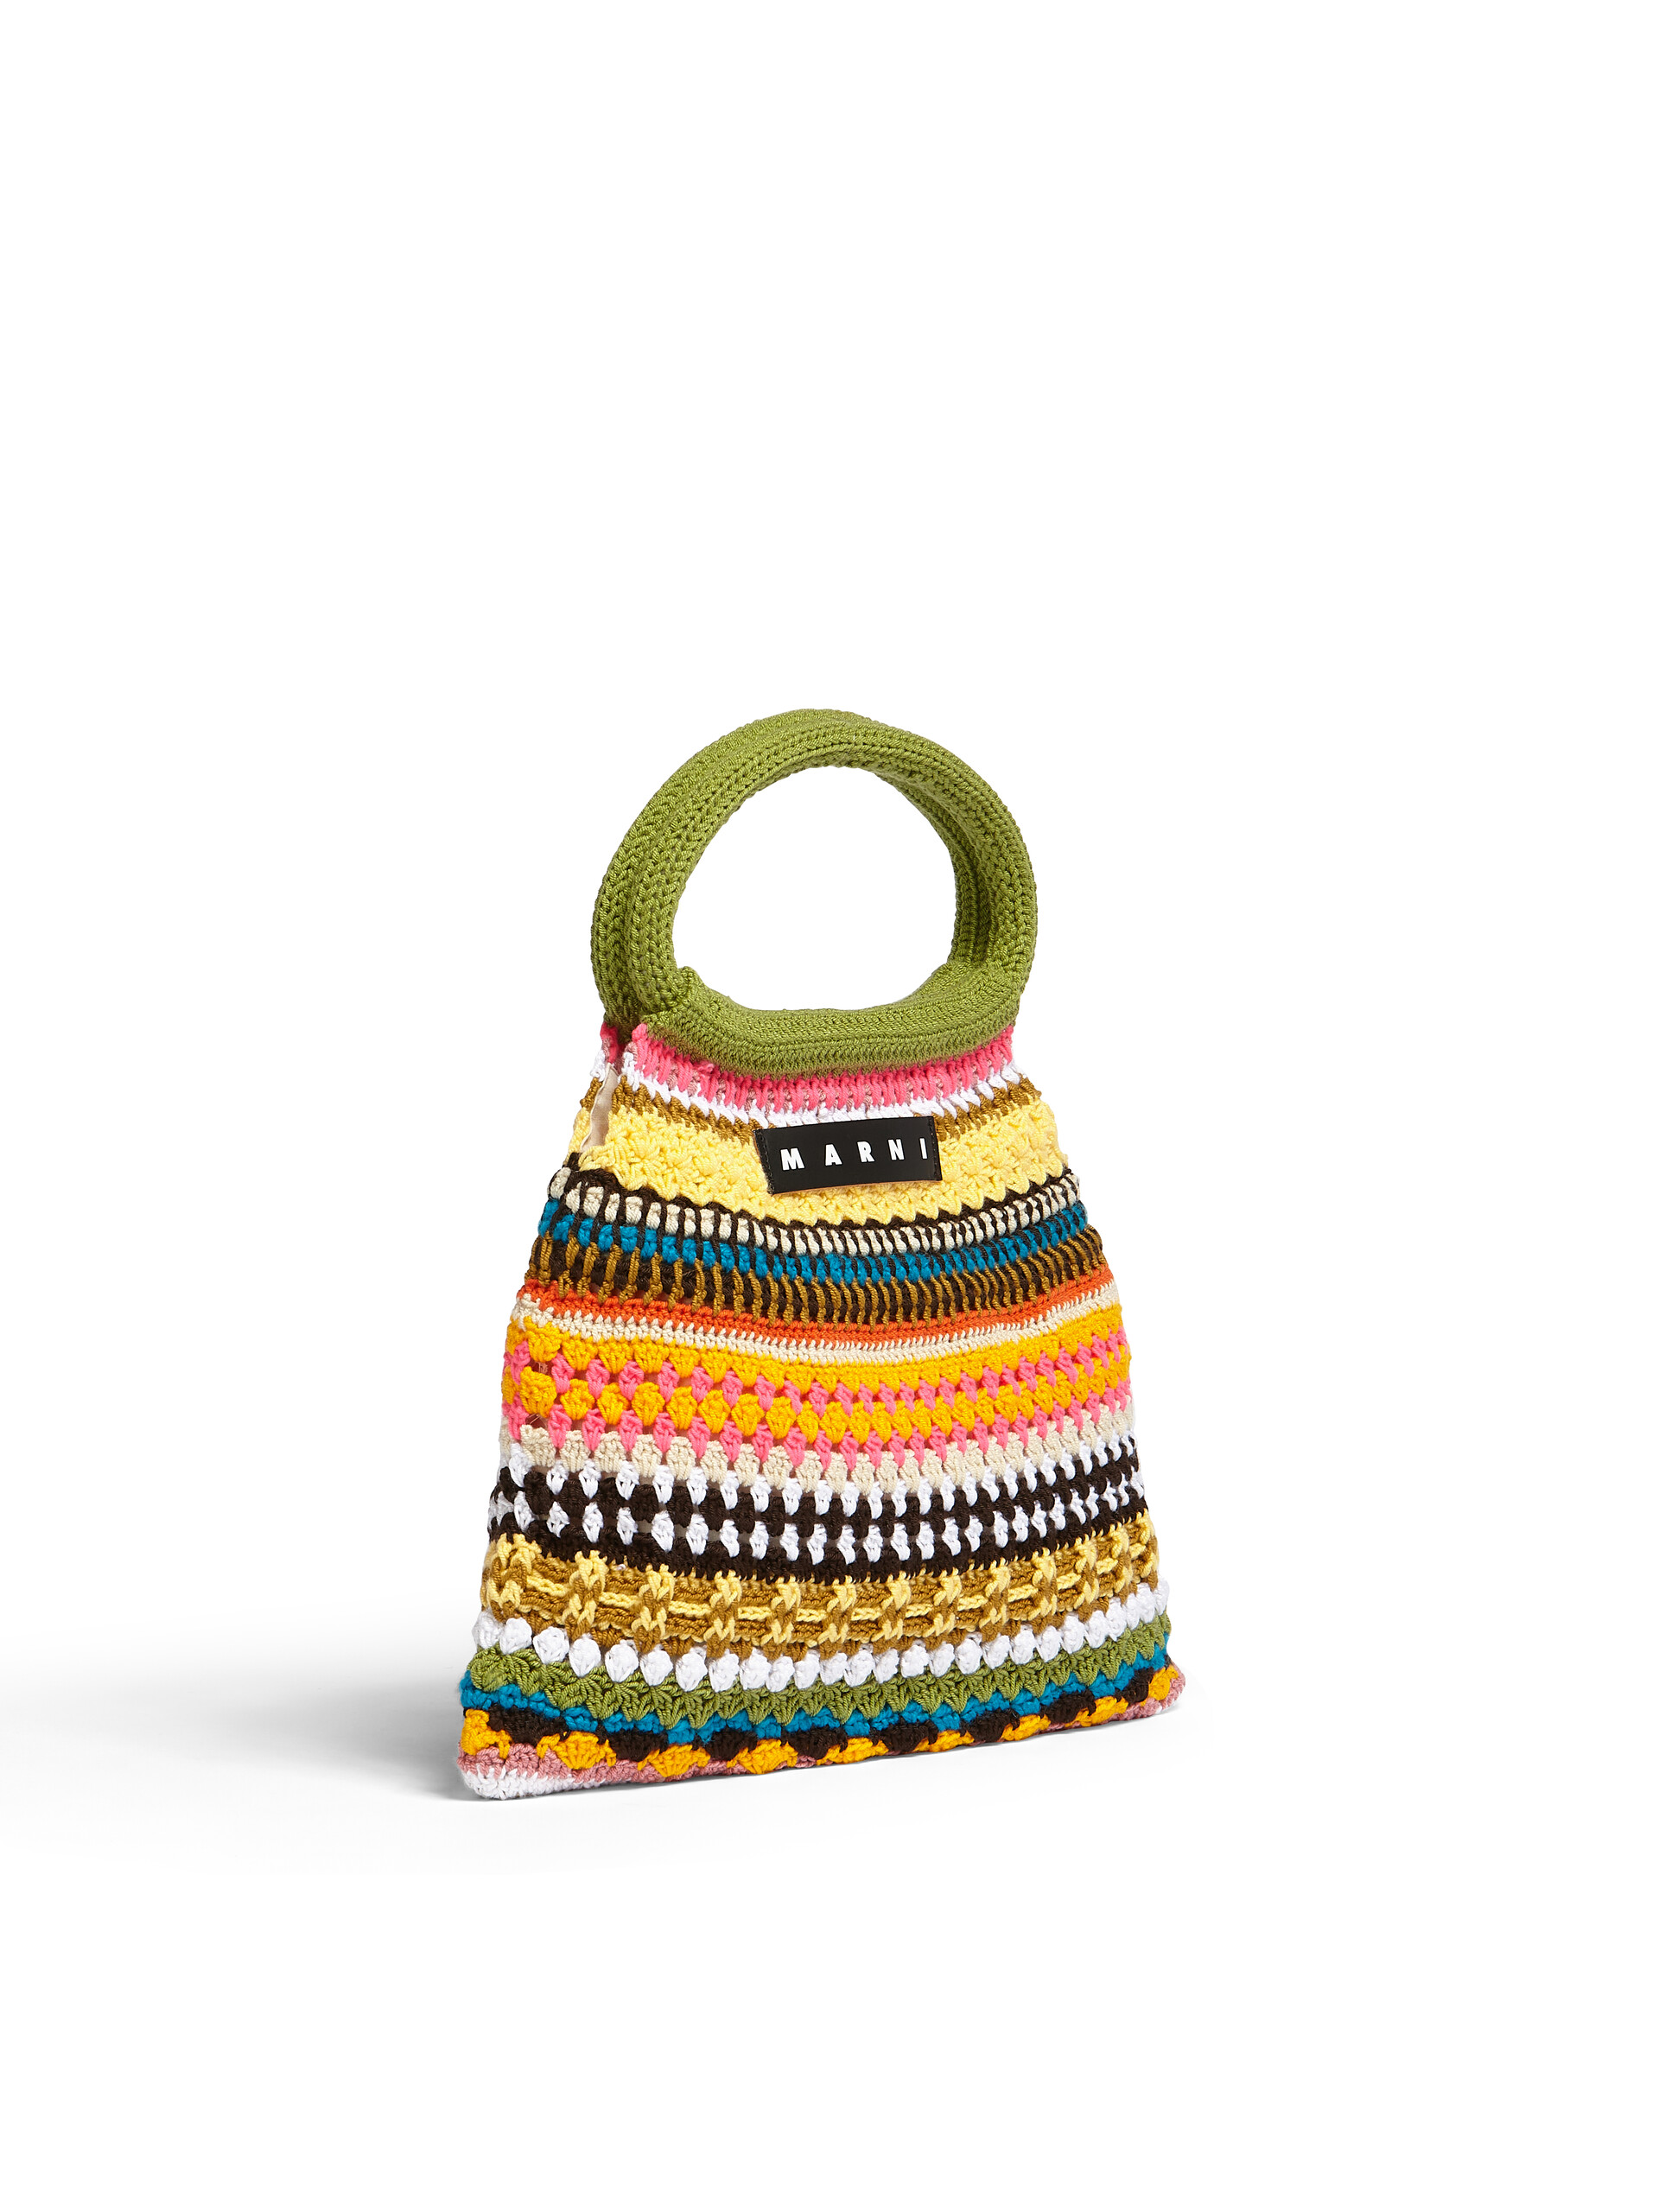 MARNI MARKET GRANNY bag in green crochet - Furniture - Image 2